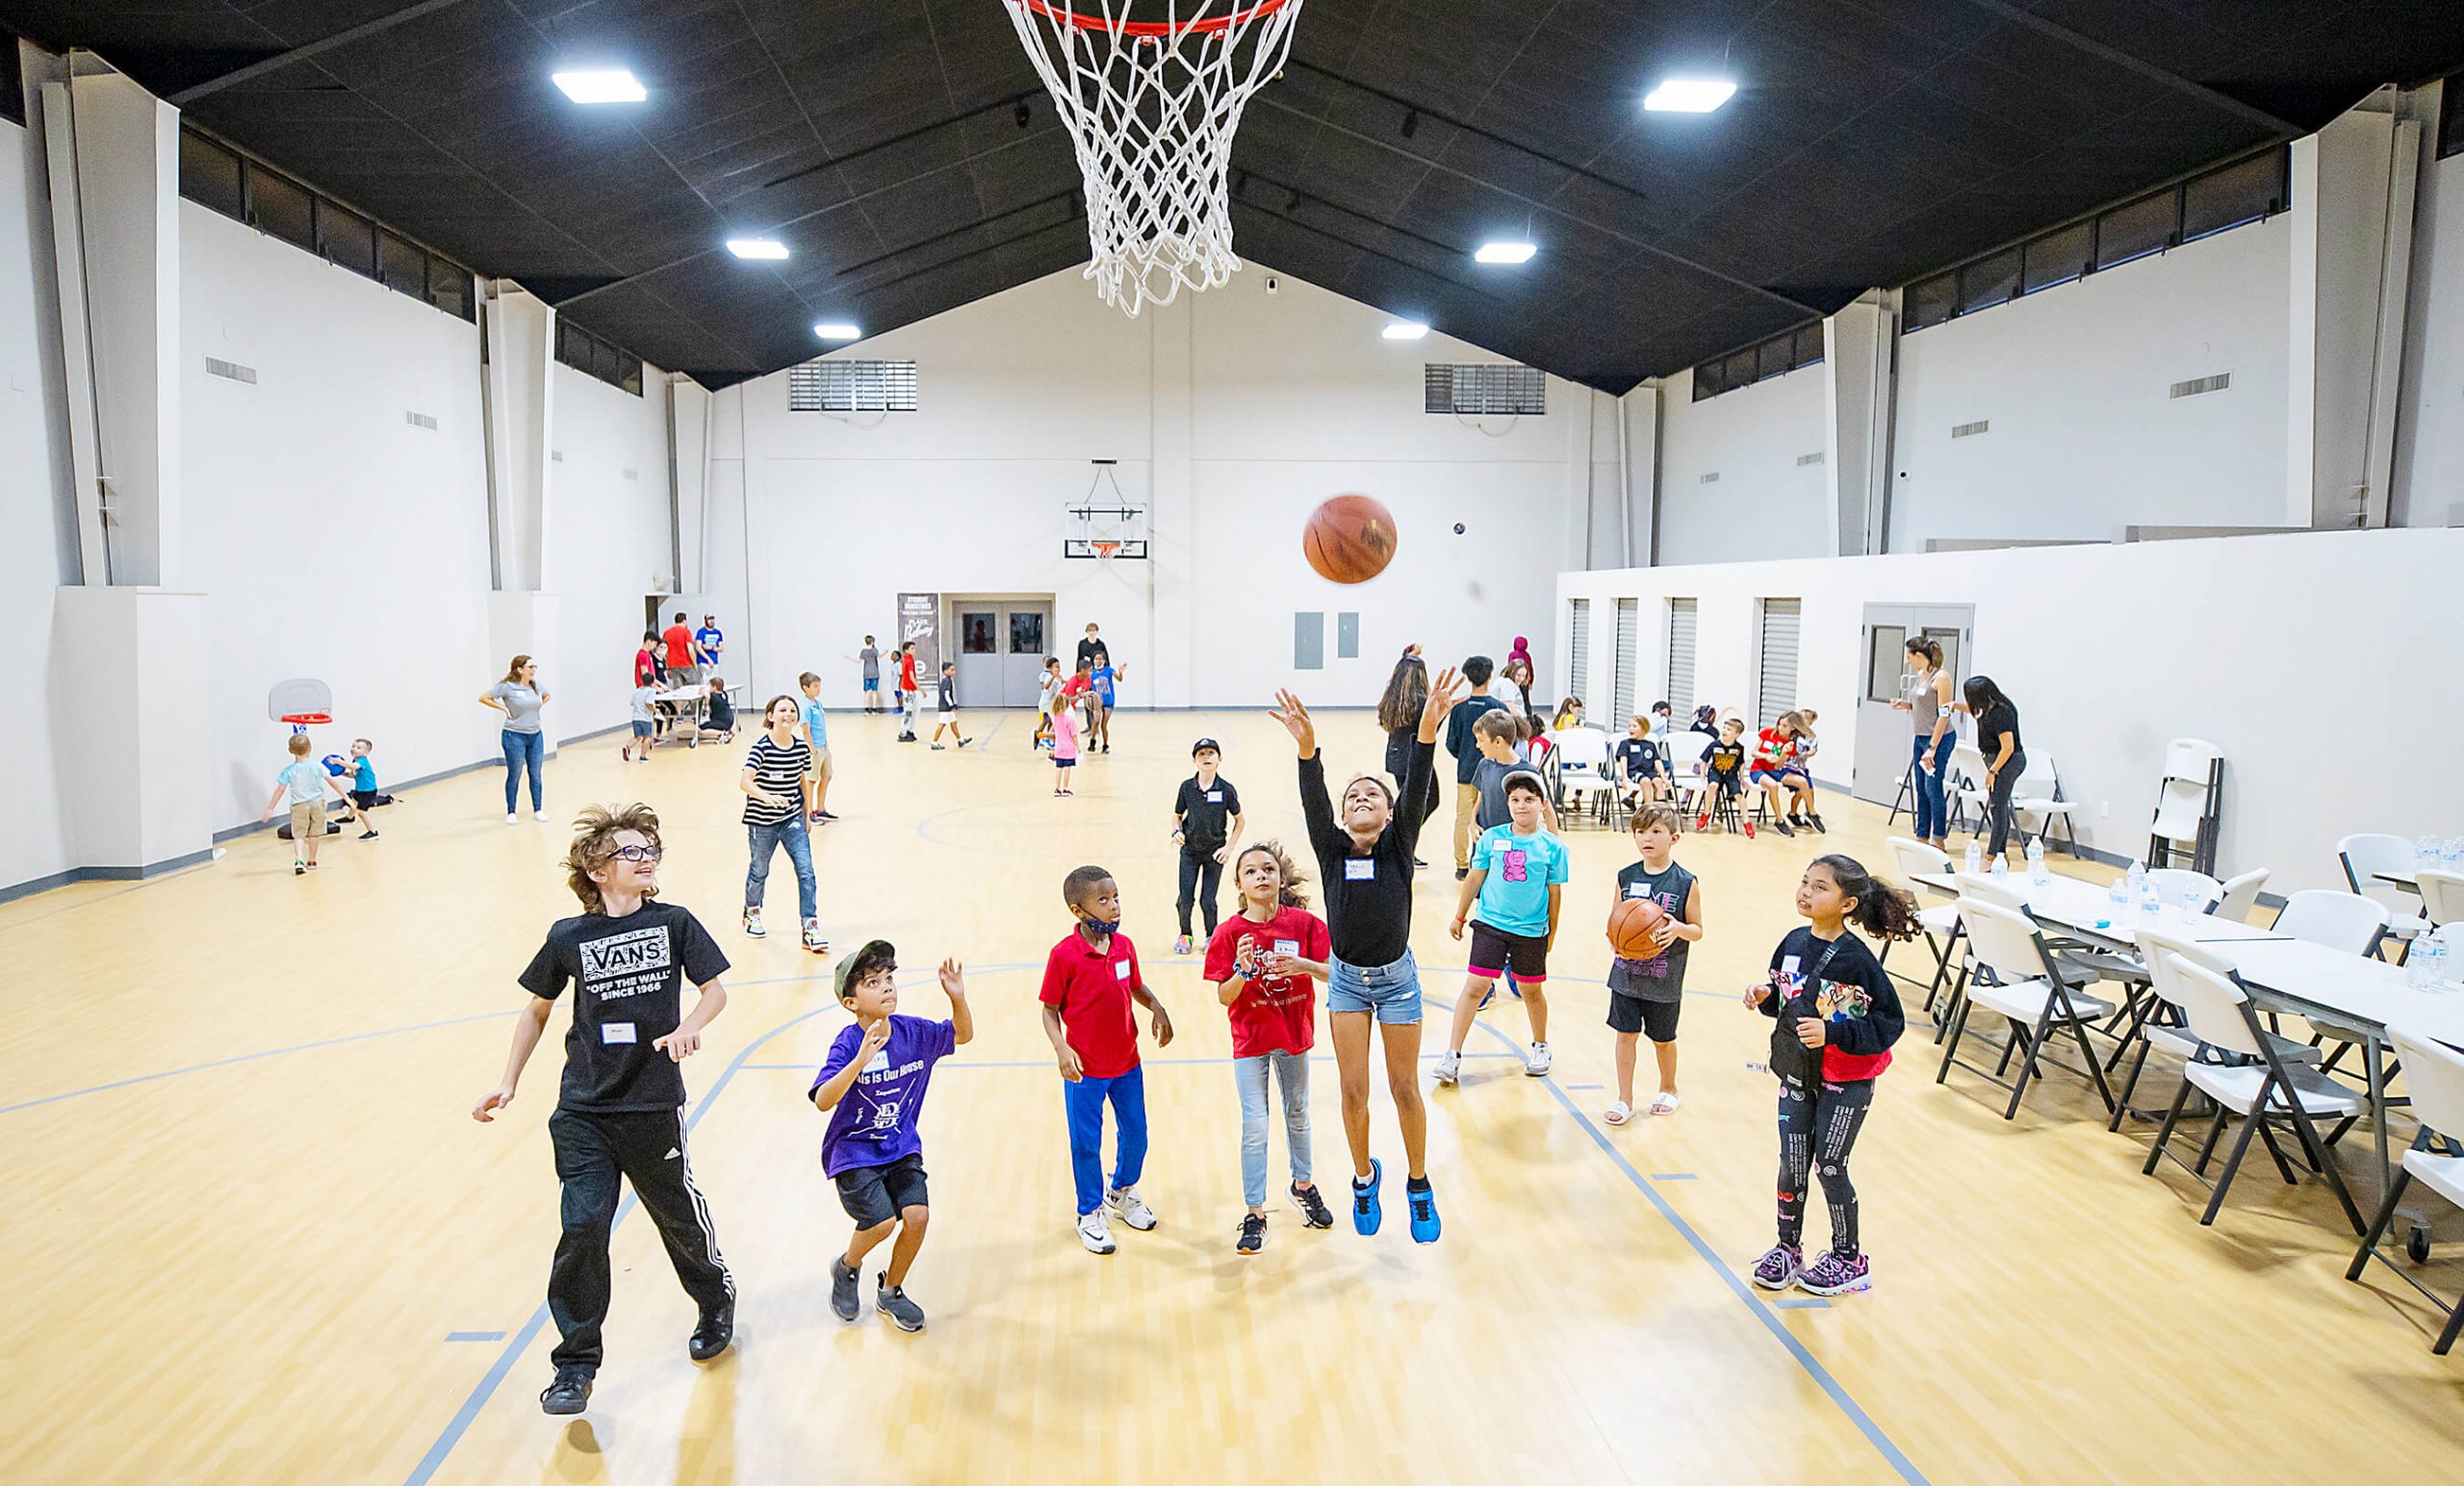 Children play basketball in a church gymnasium